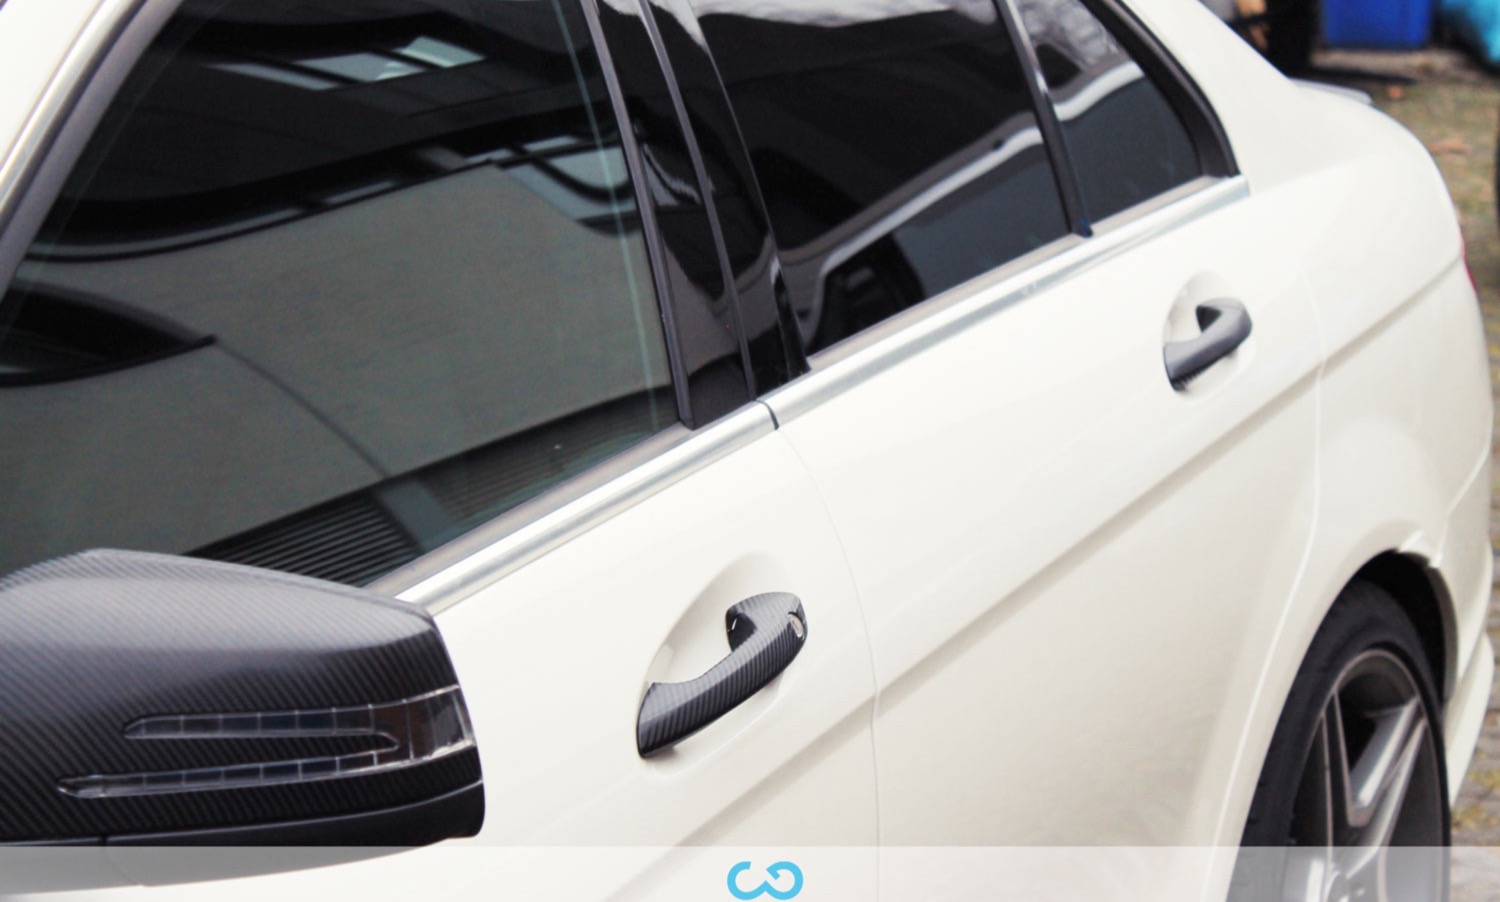 autofolierung-car-wrapping-12-teilfolierung-carbon-motorhaub-frontlippe-seitenspiegel-spoiler-mercedes-c-reihe-2014-01-18-6.jpg